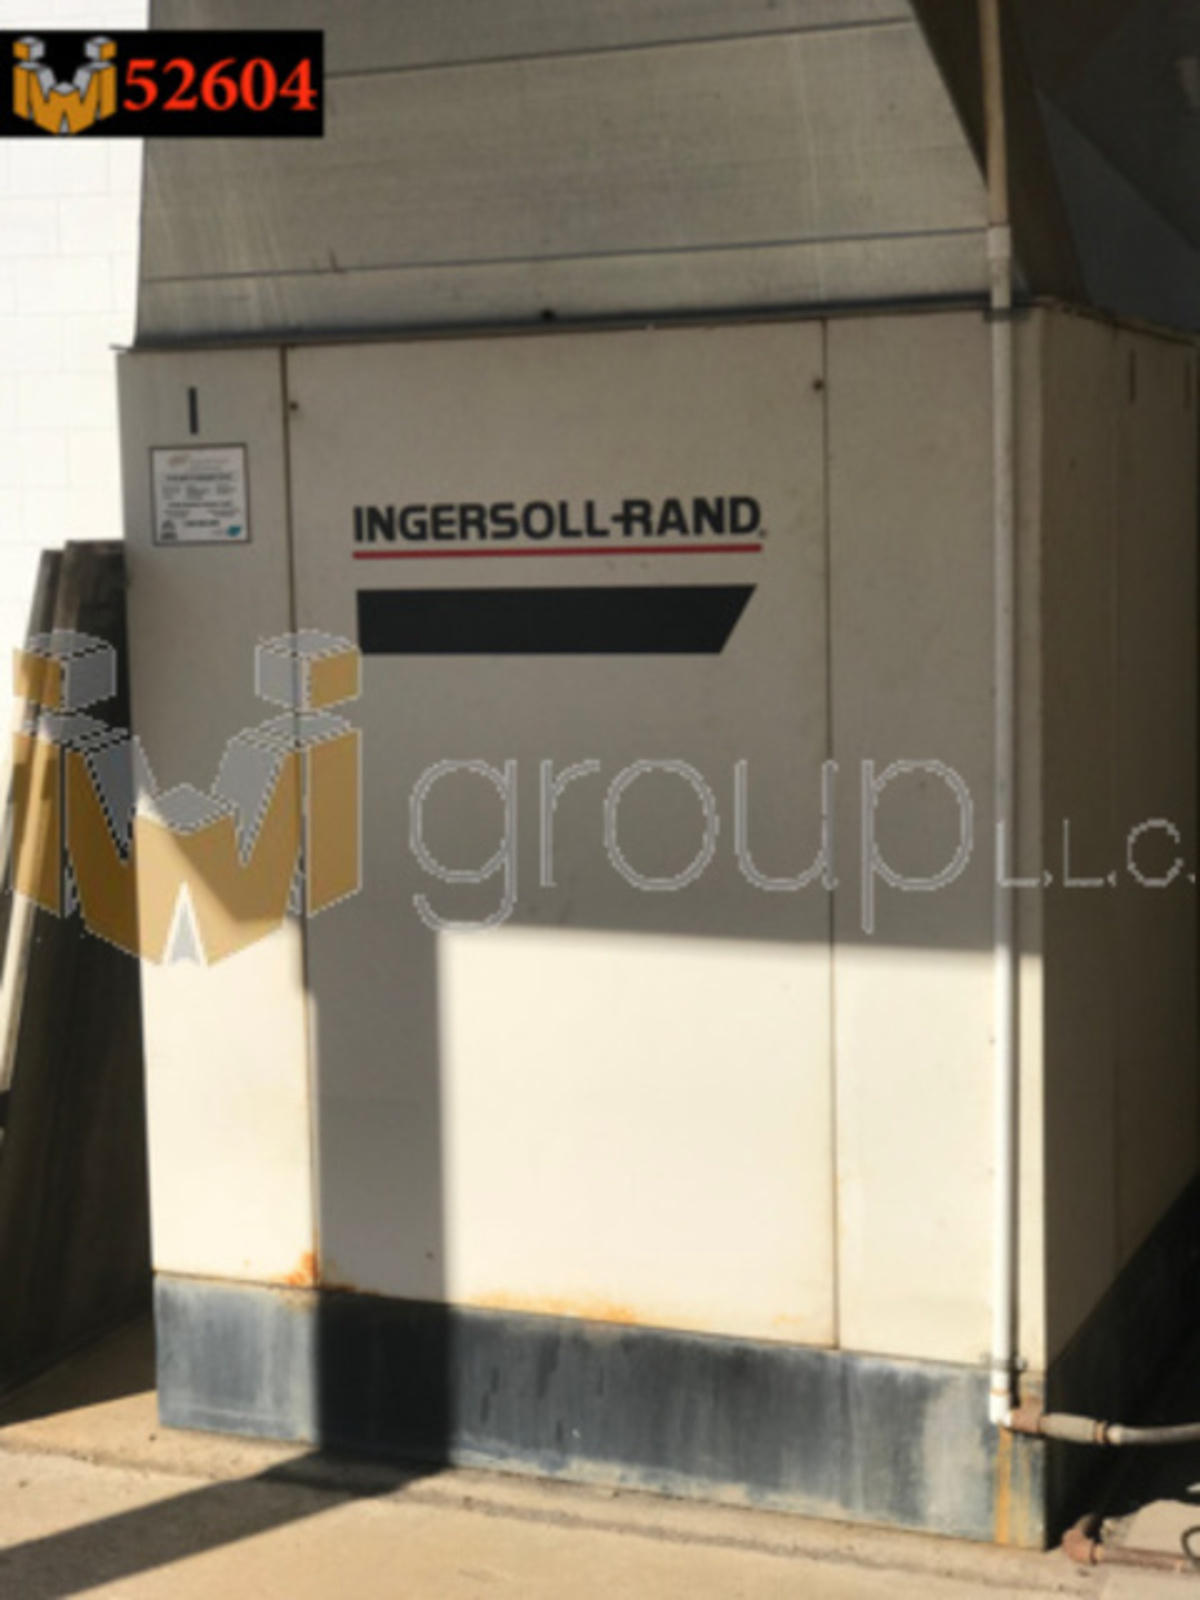 Ingersoll Rand Air Compressor 52604